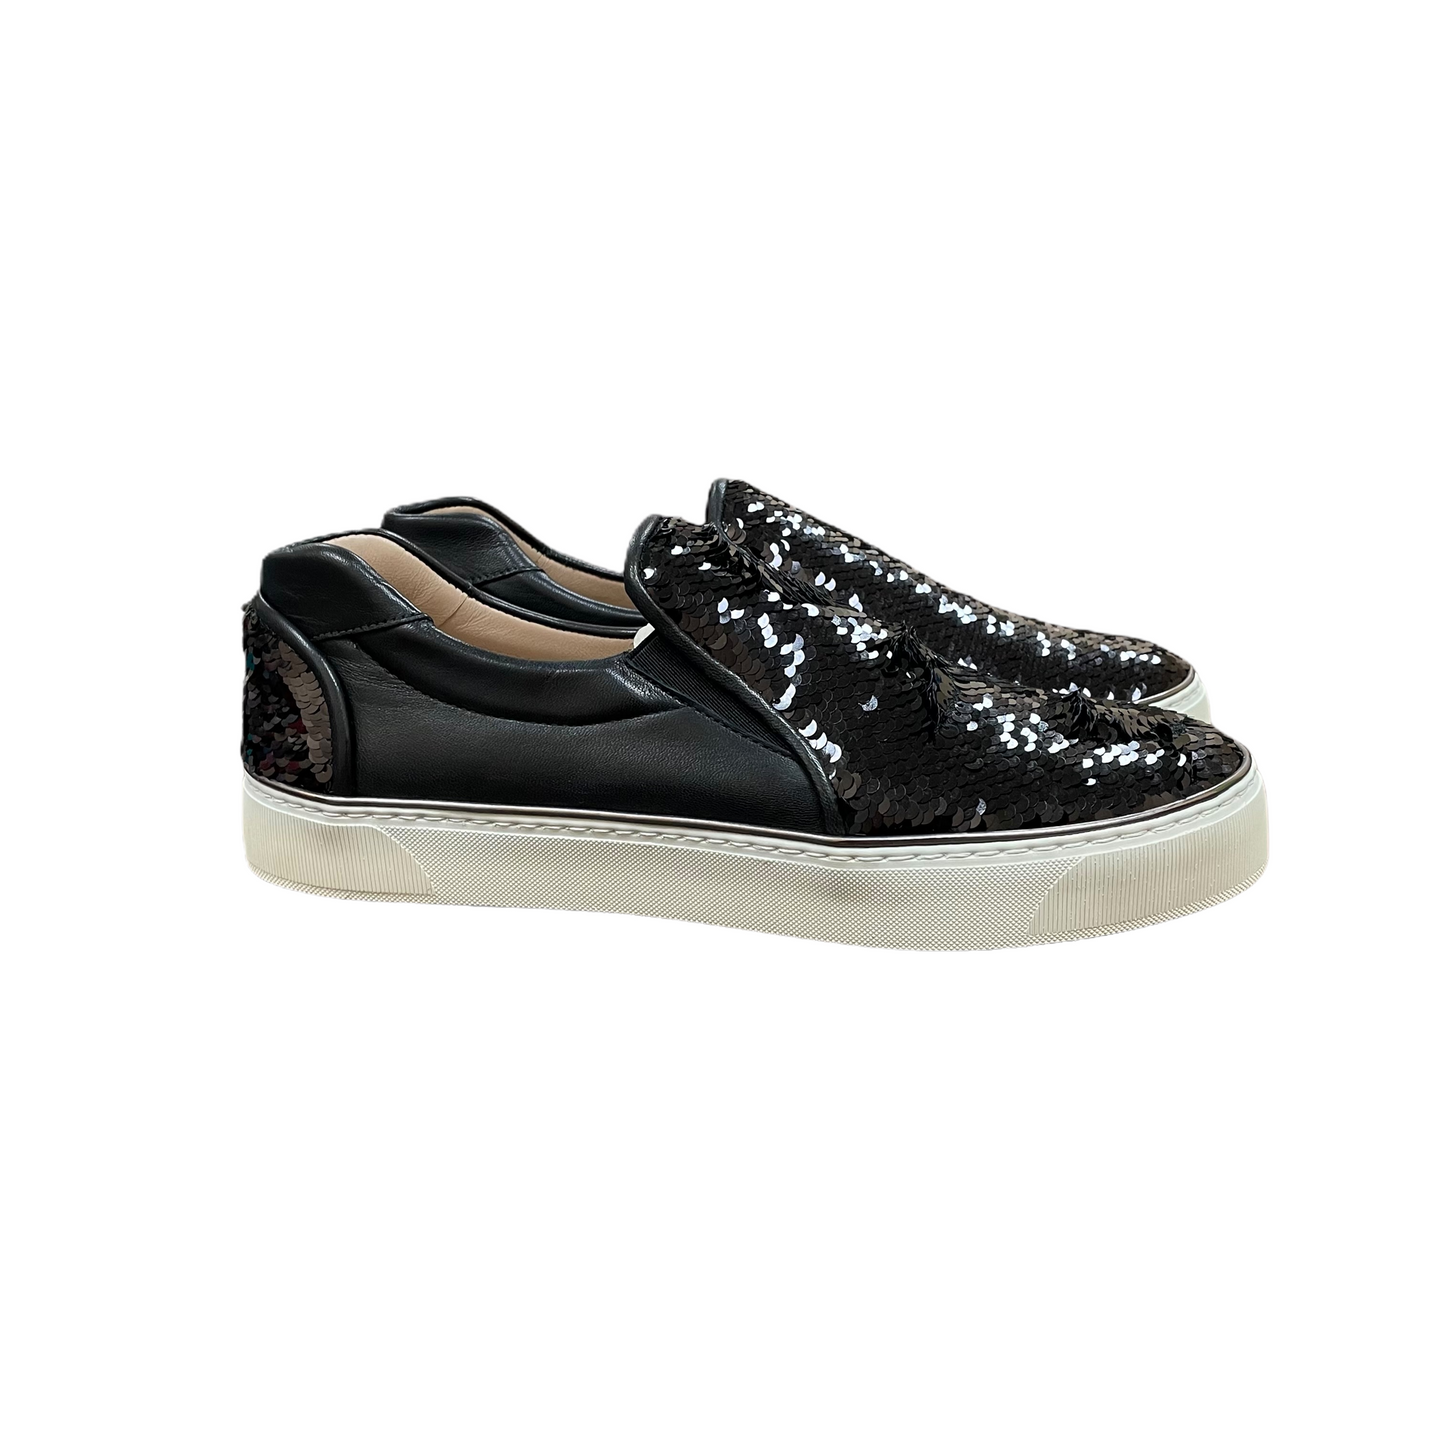 Black Shoes Flats By Stuart Weitzman, Size: 8